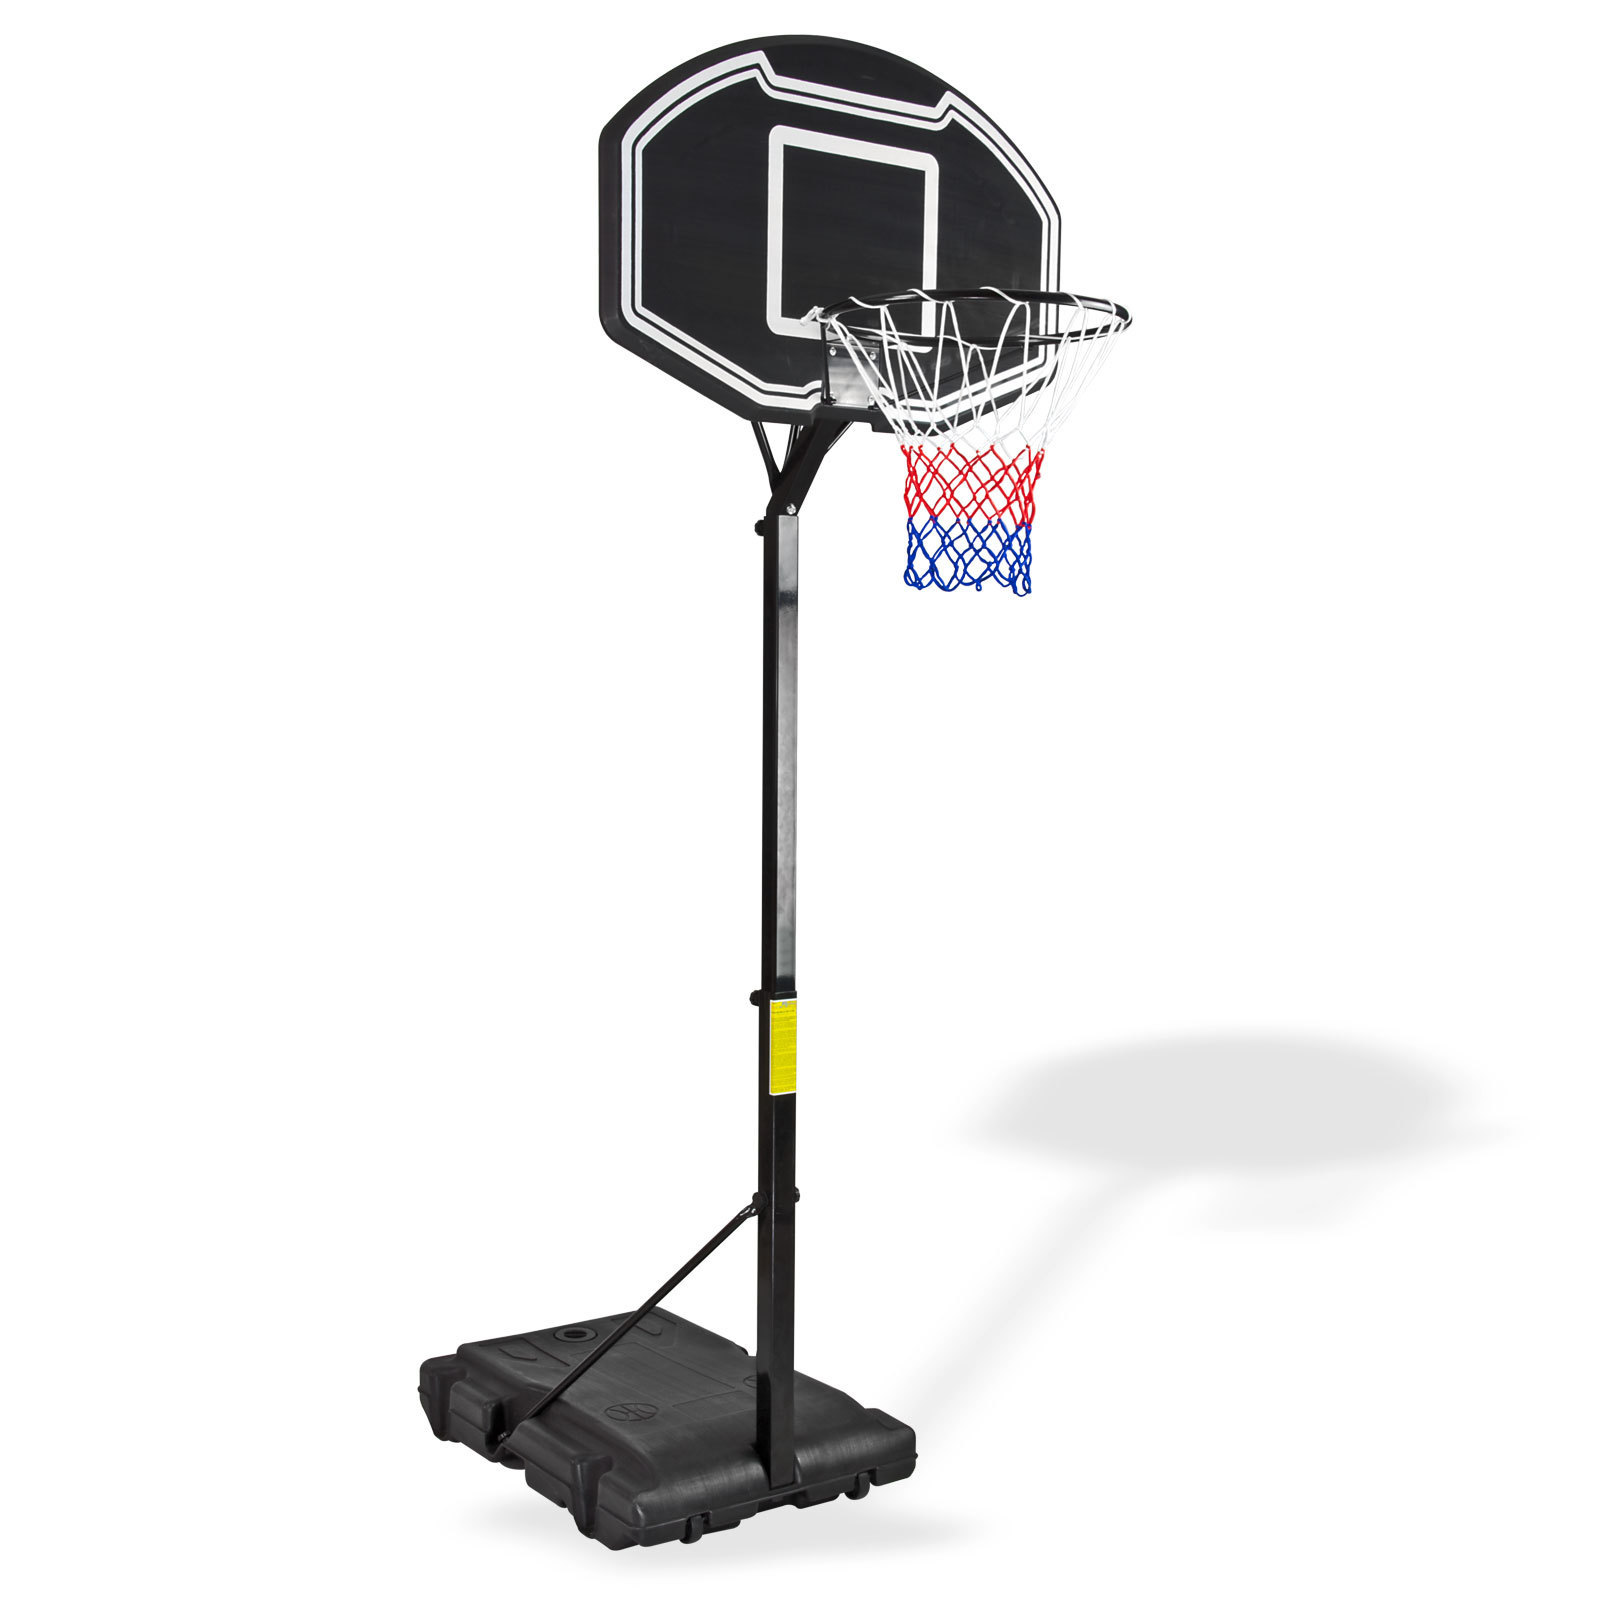 DEMA Basketballkorb / Basketballständer BK 260